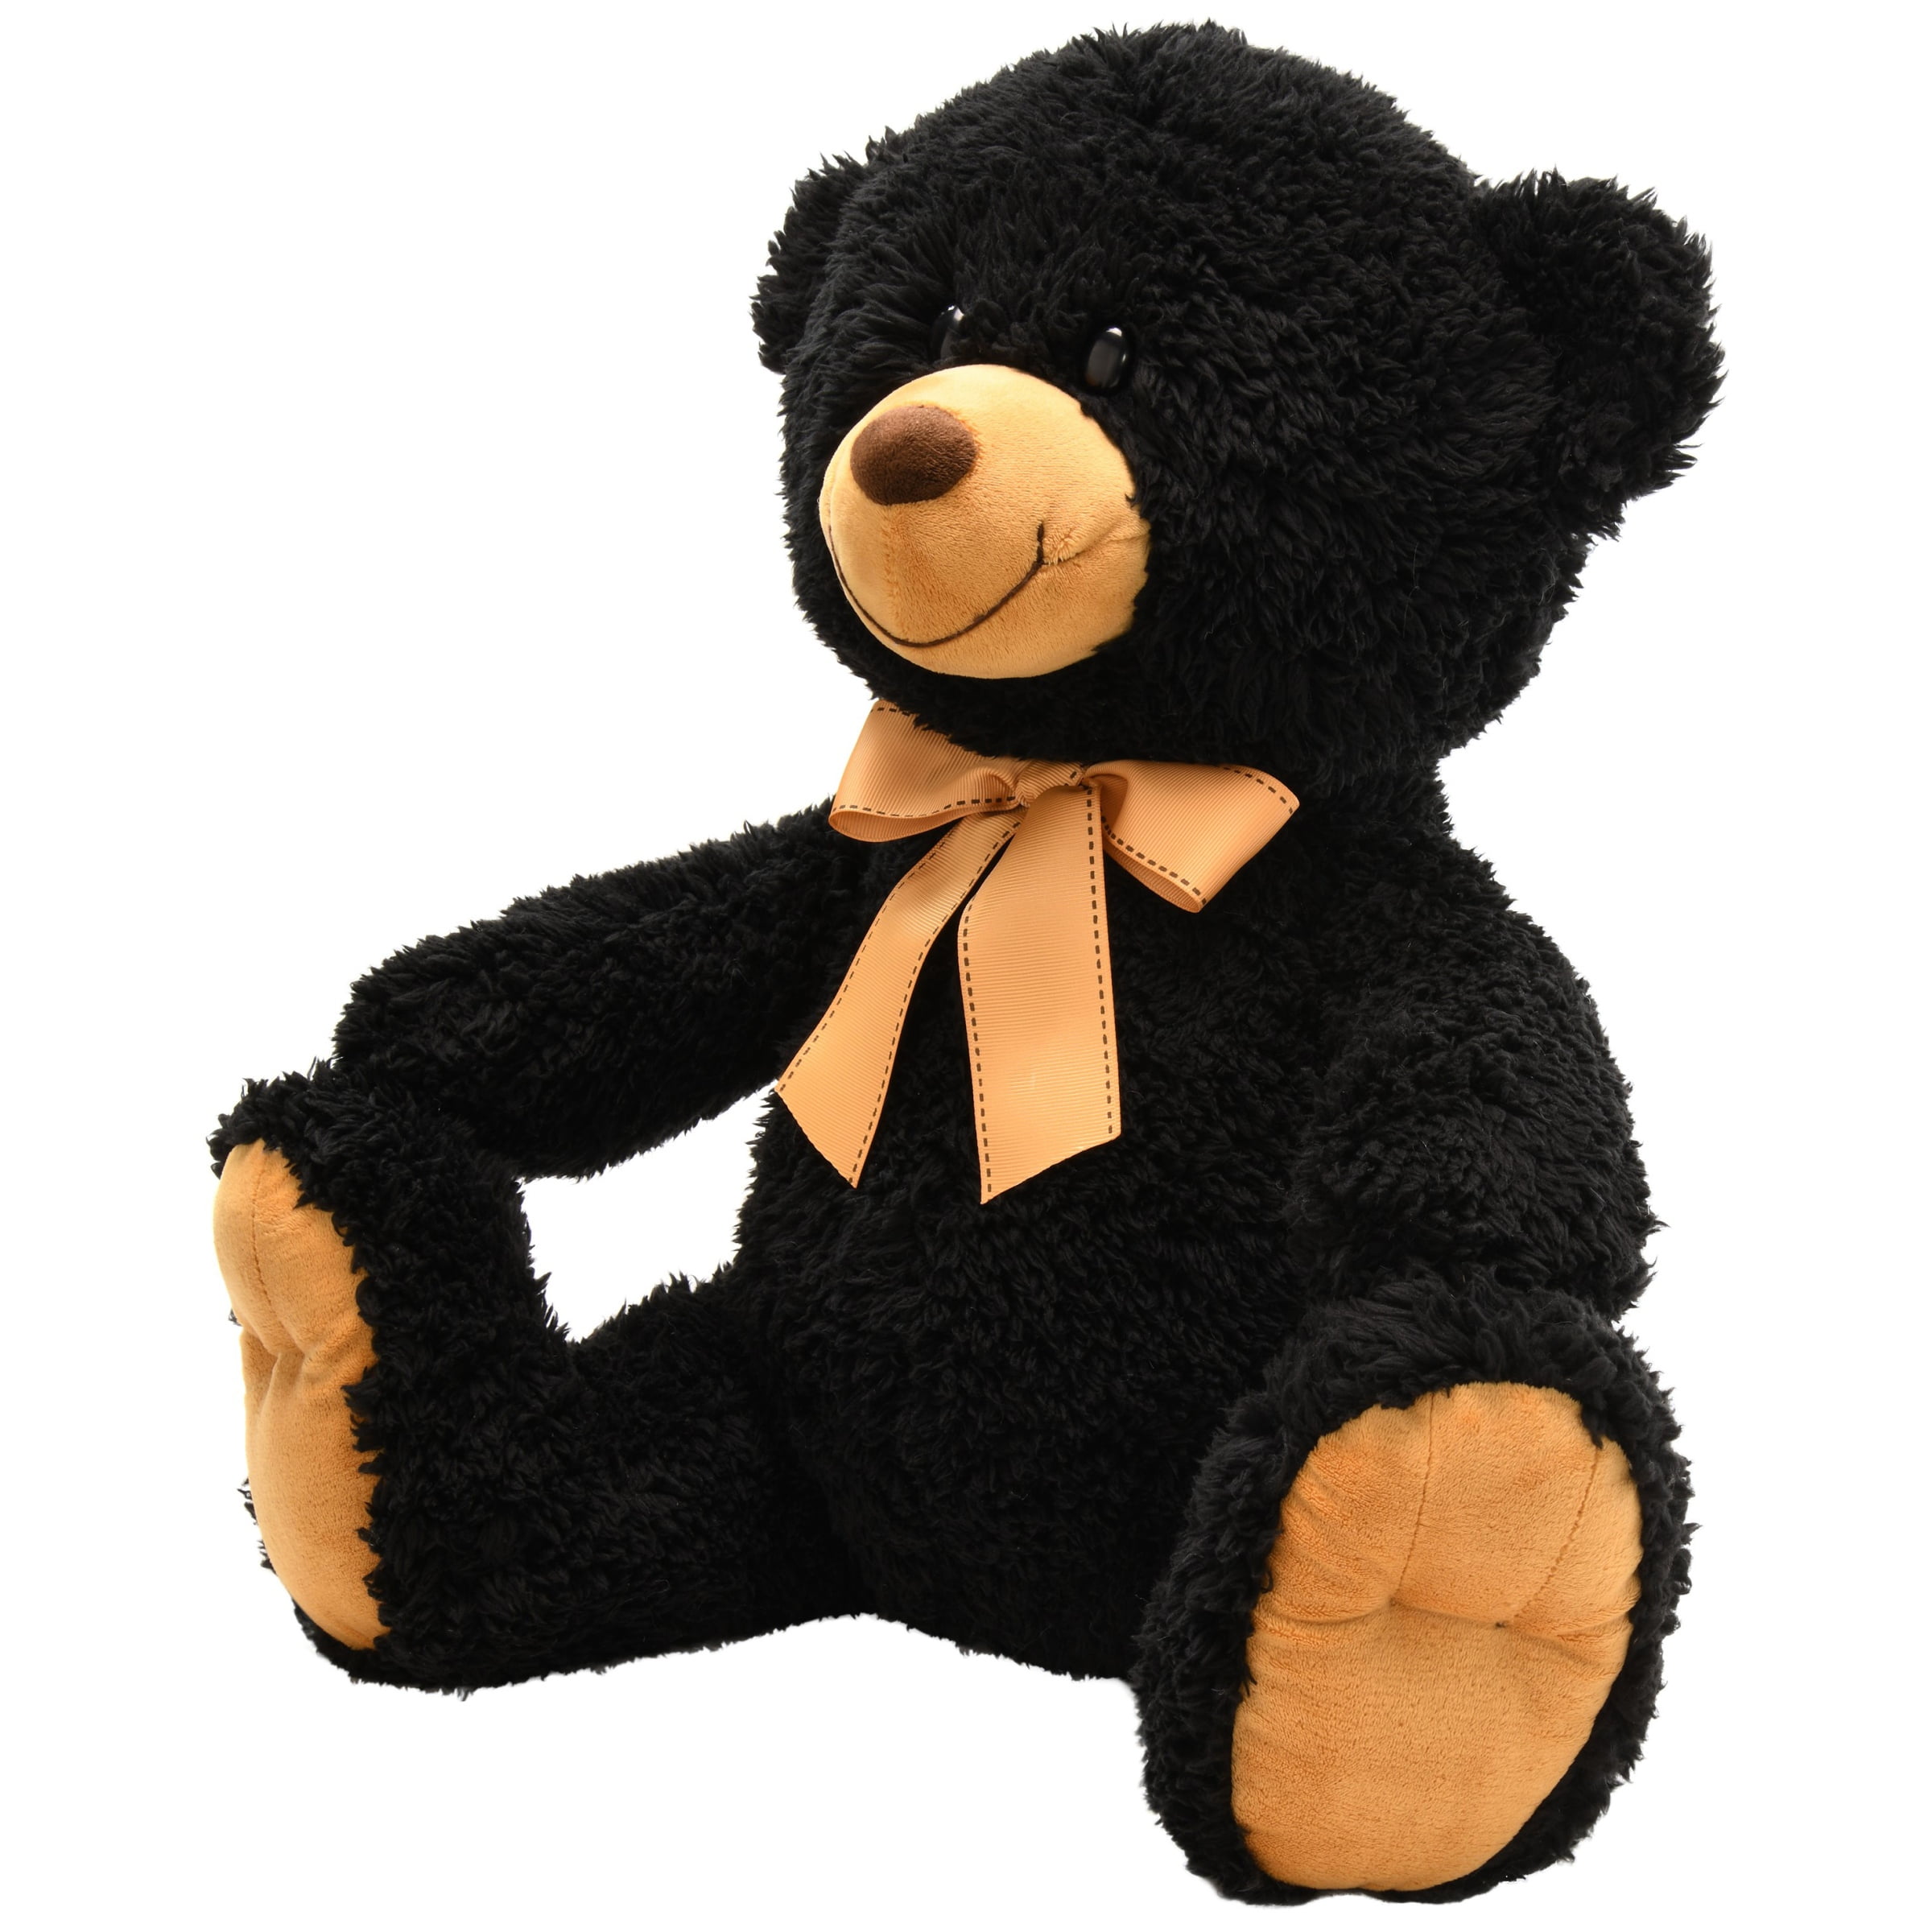 black bear teddy